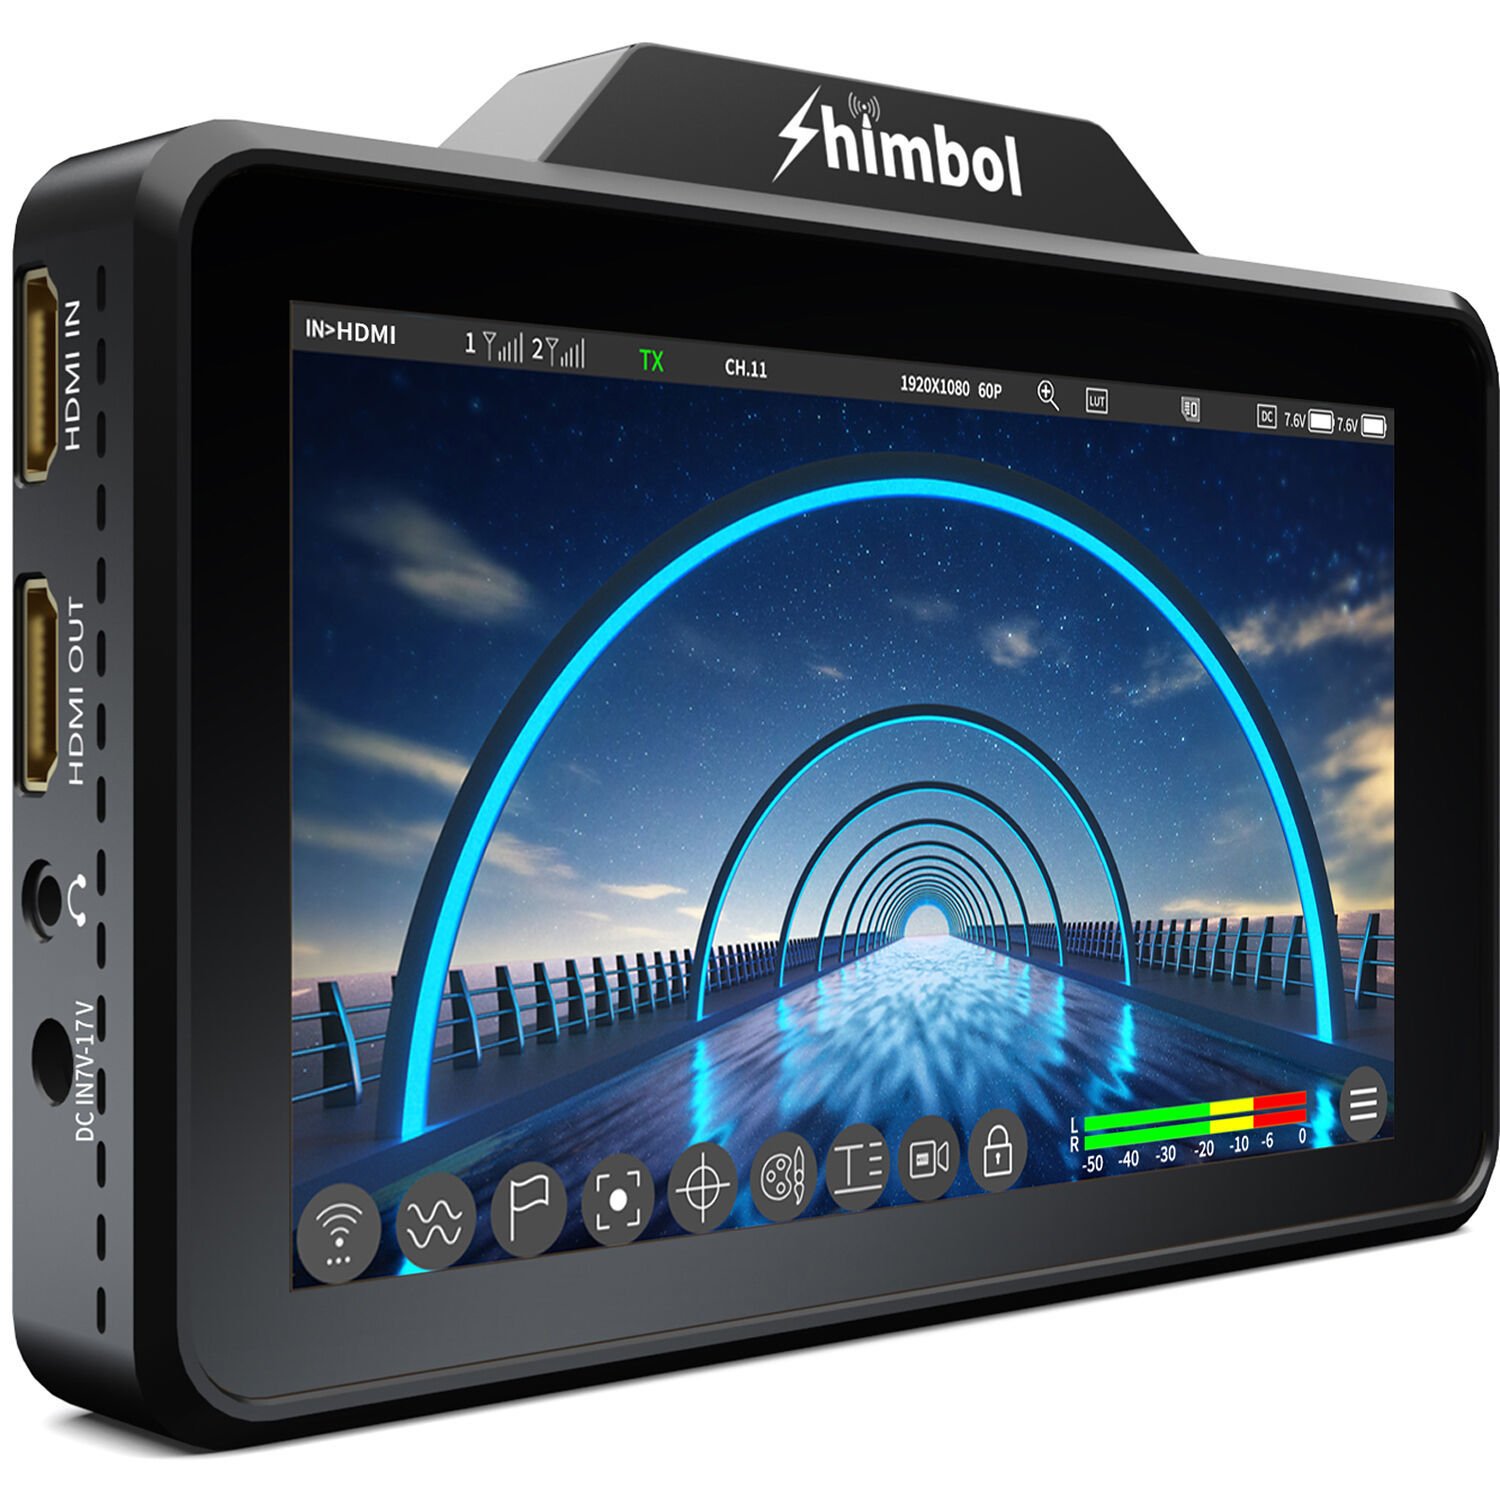 Shimbol ZO600M 5,5'' 1080p60 Kablosuz HDMI Dokunmatik Ekran Kayıtçı/Monitör